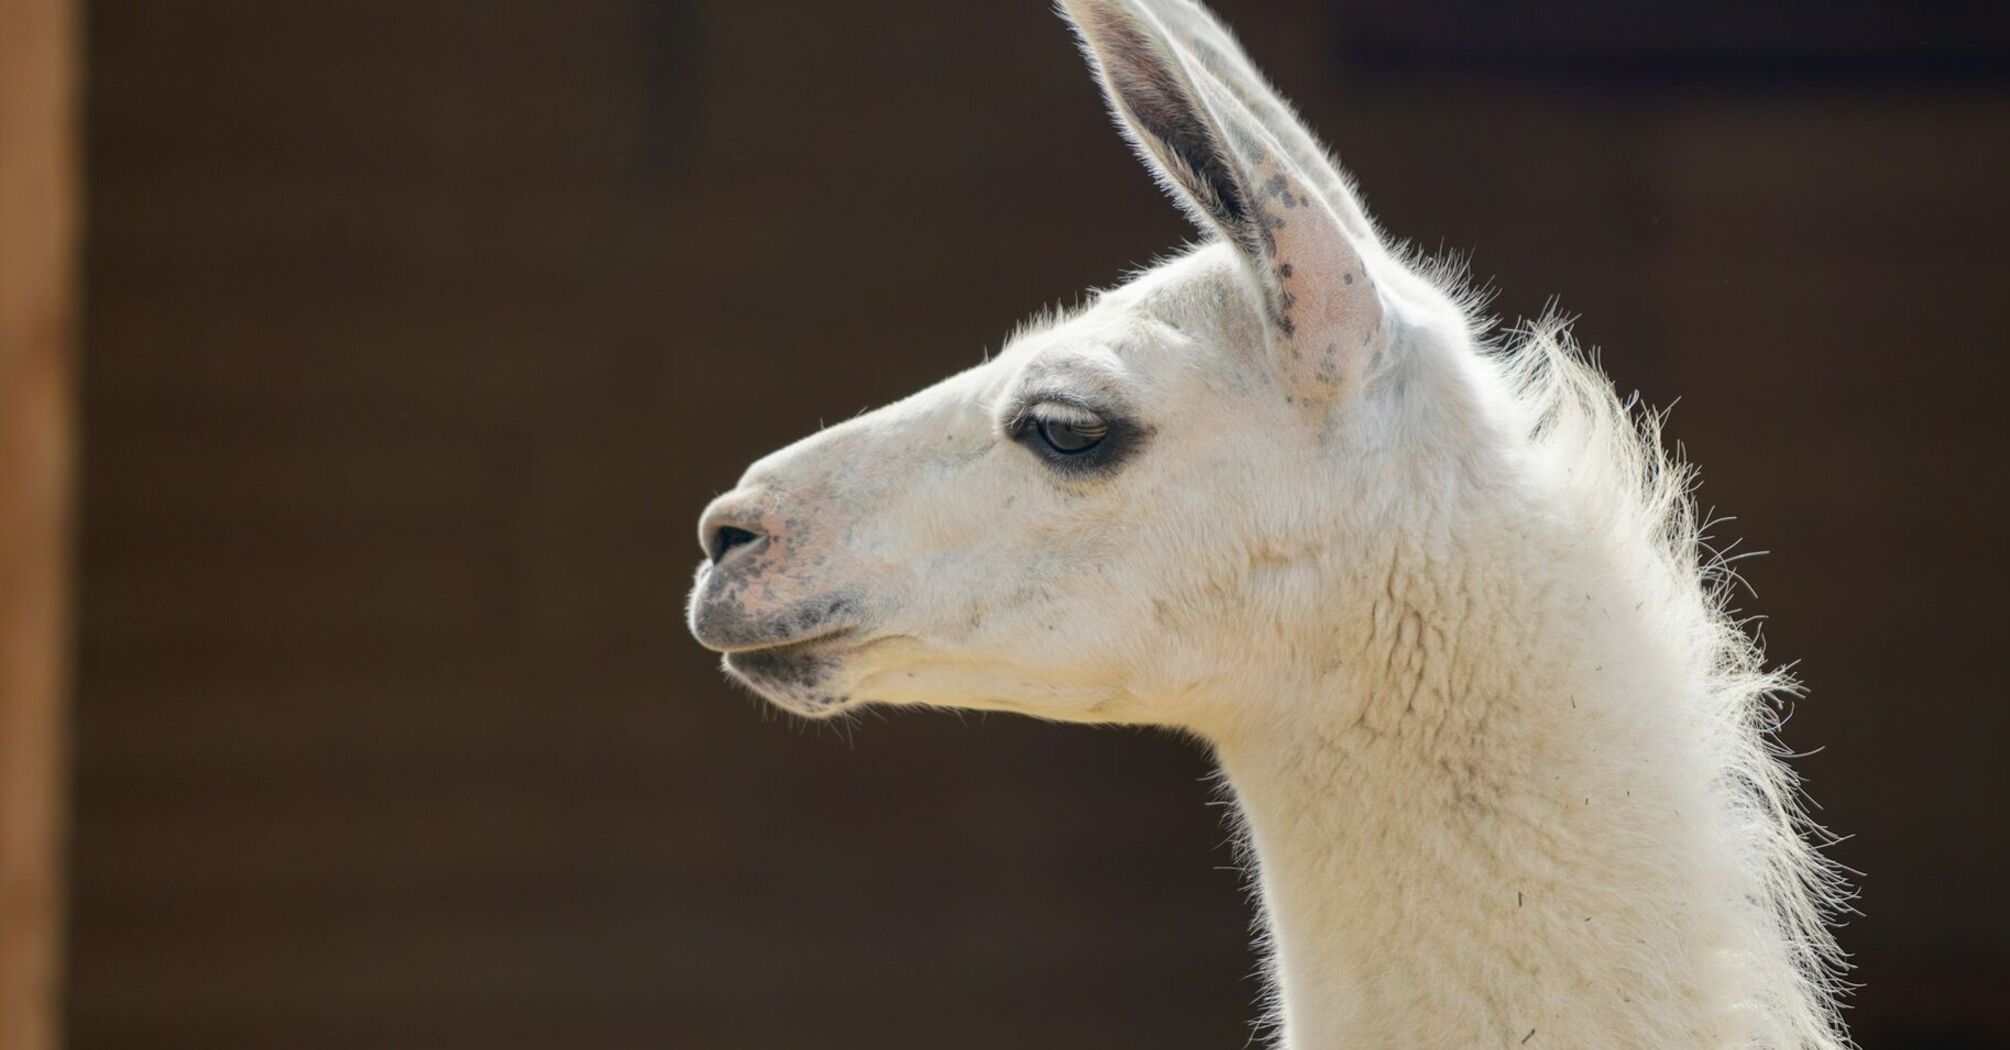 Close-up of a white llama's head